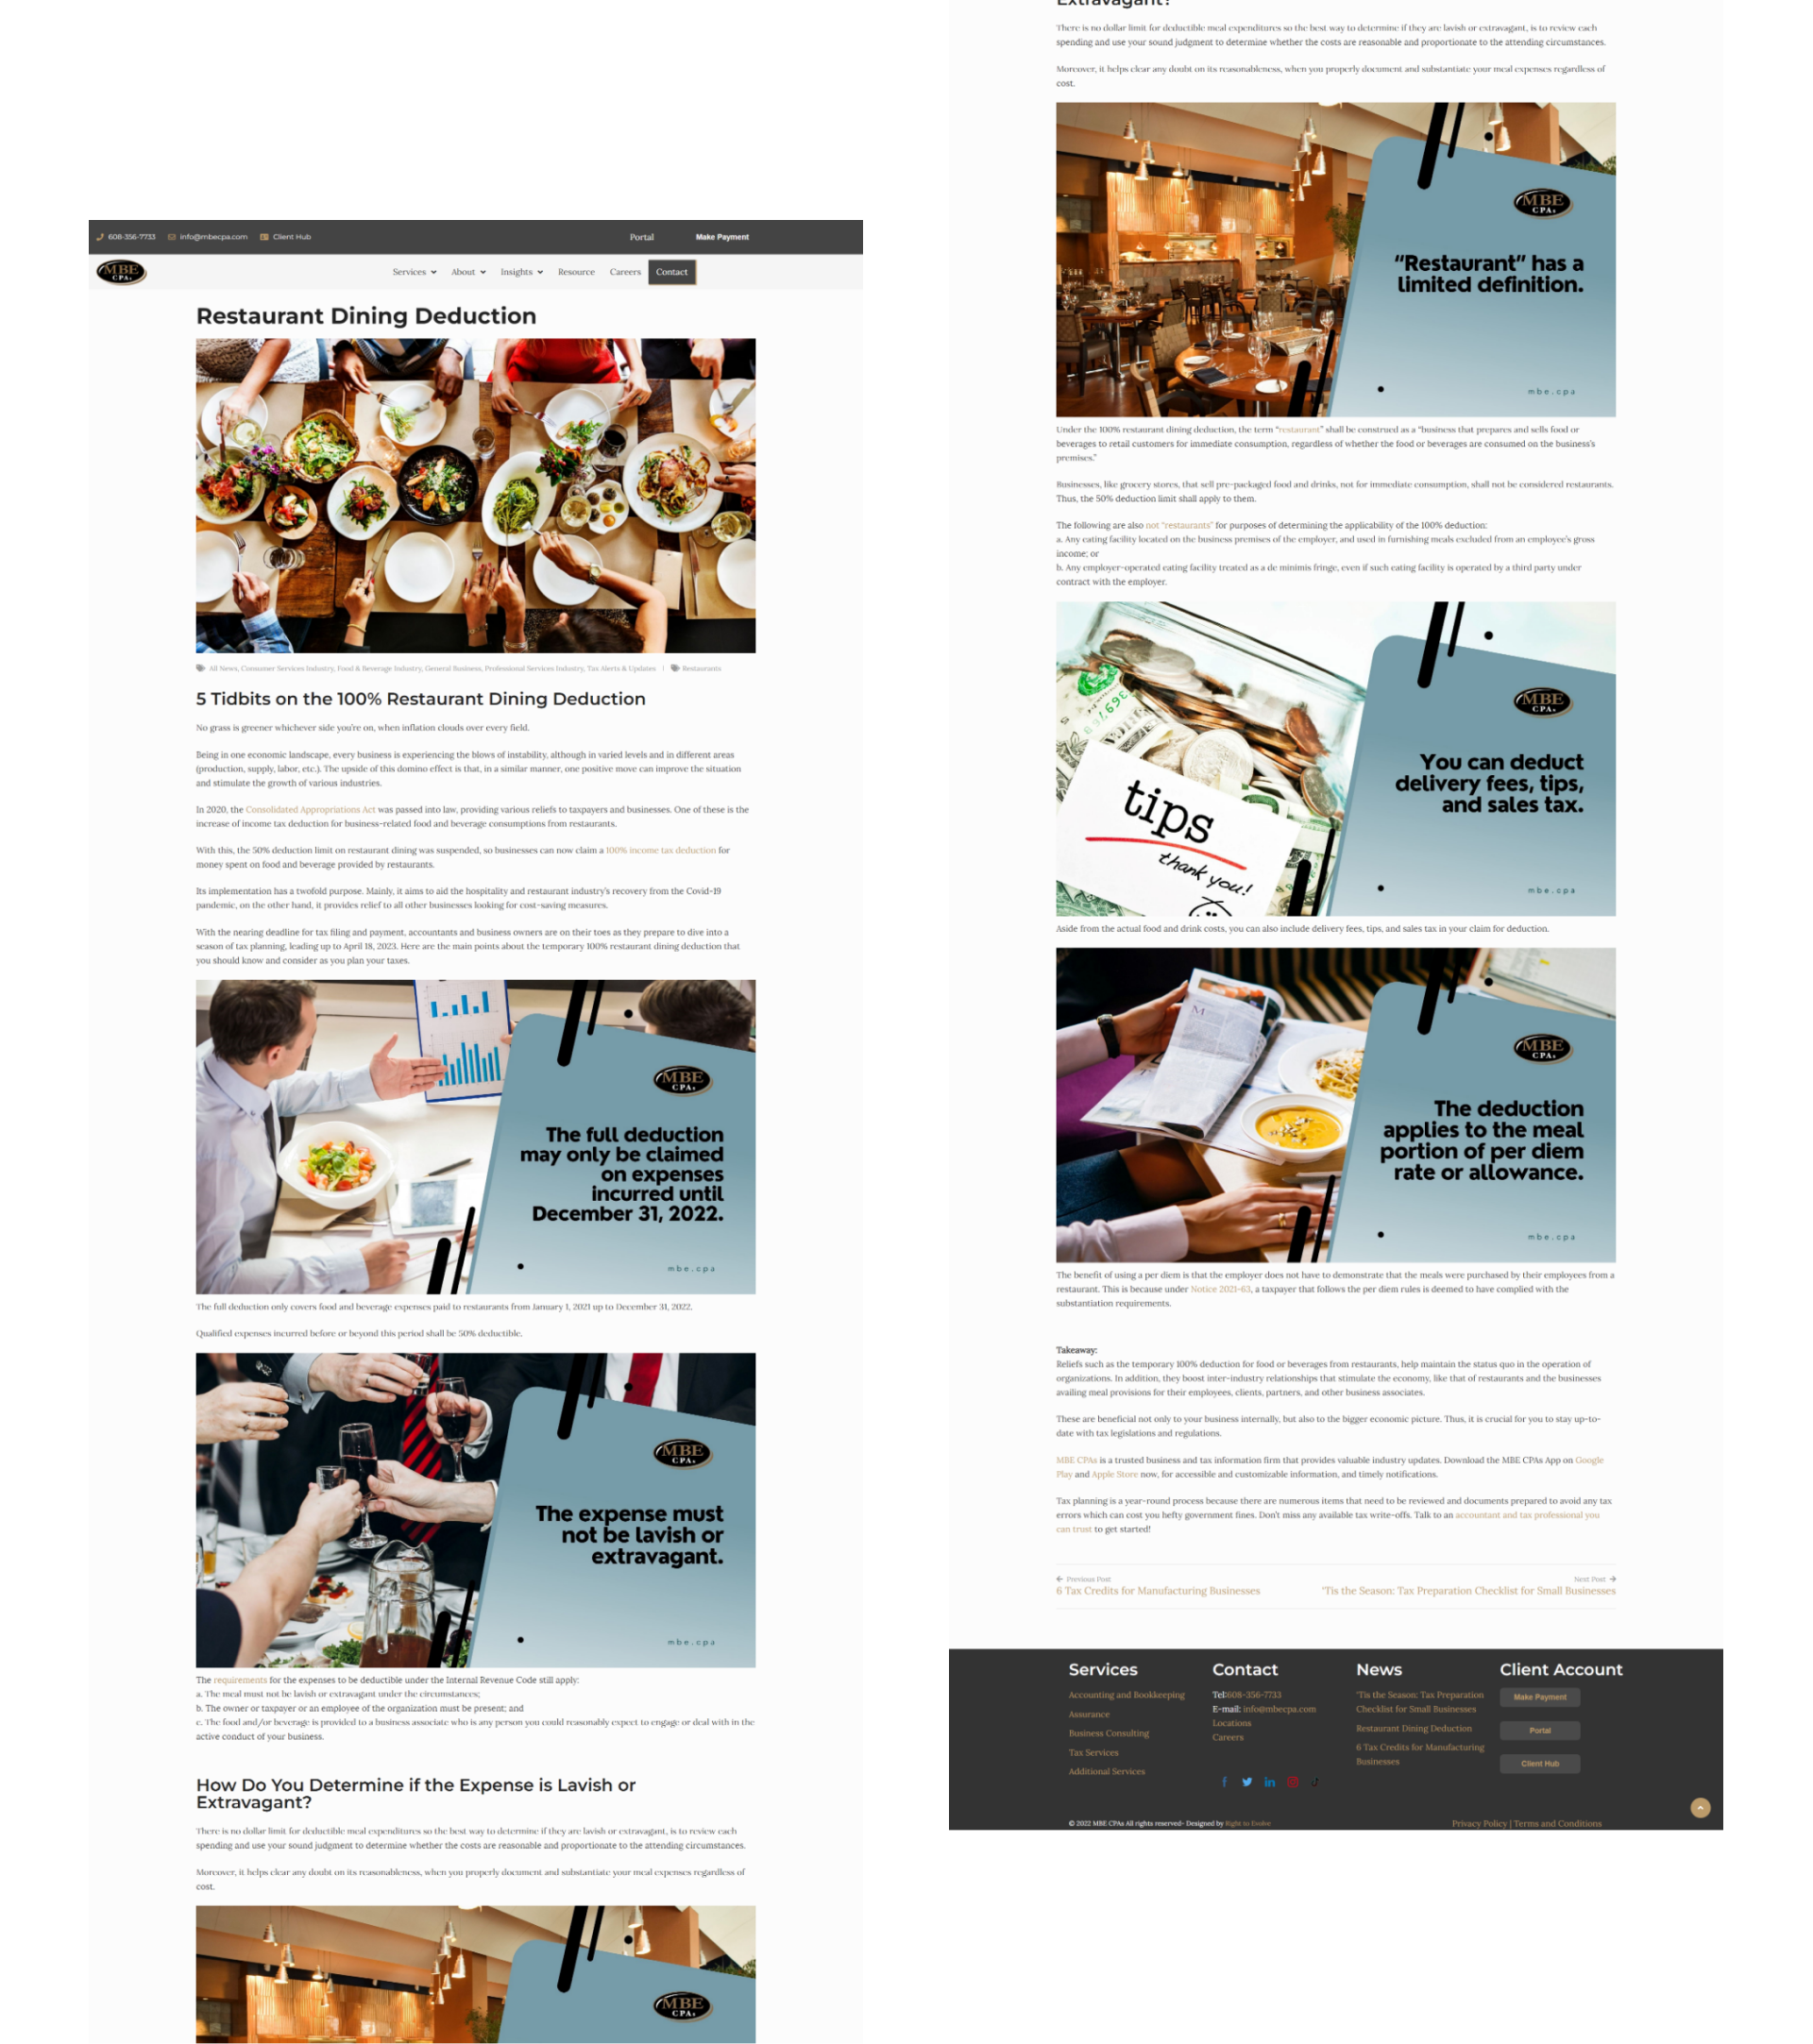 Brand House blog on restaurant dining deduction